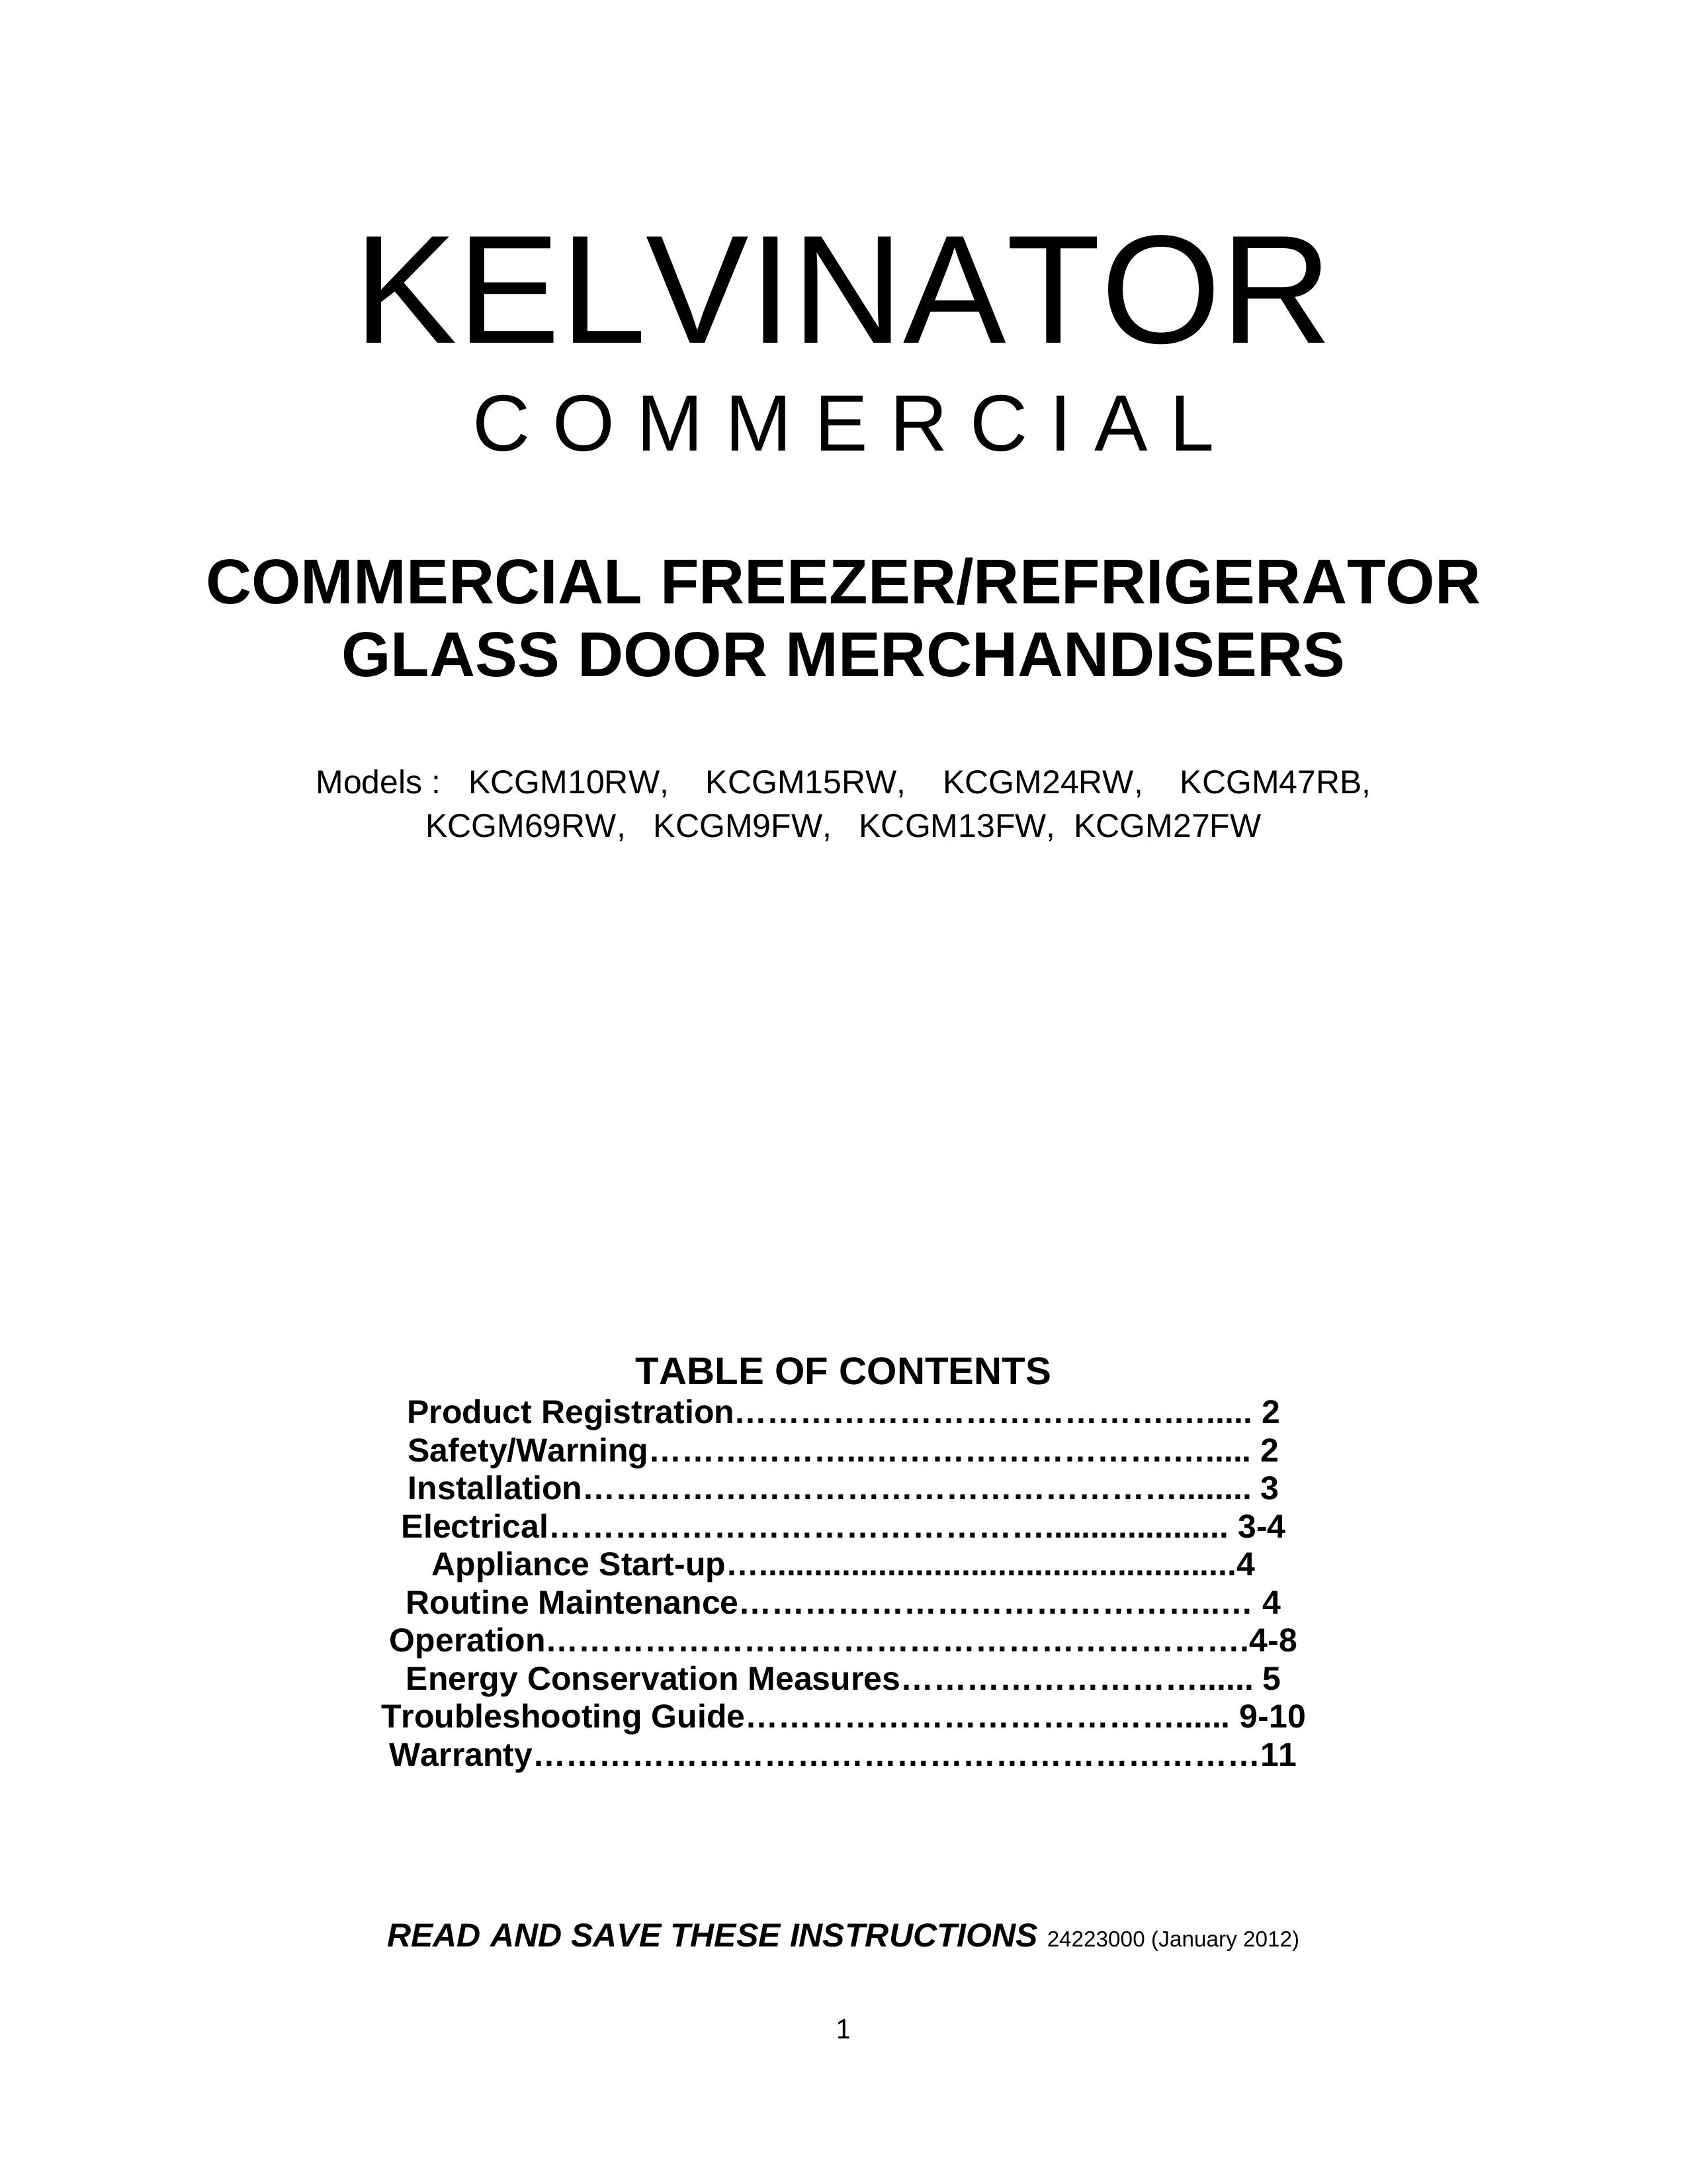 Kelvinator KCGM15RW Refrigerator User Manual